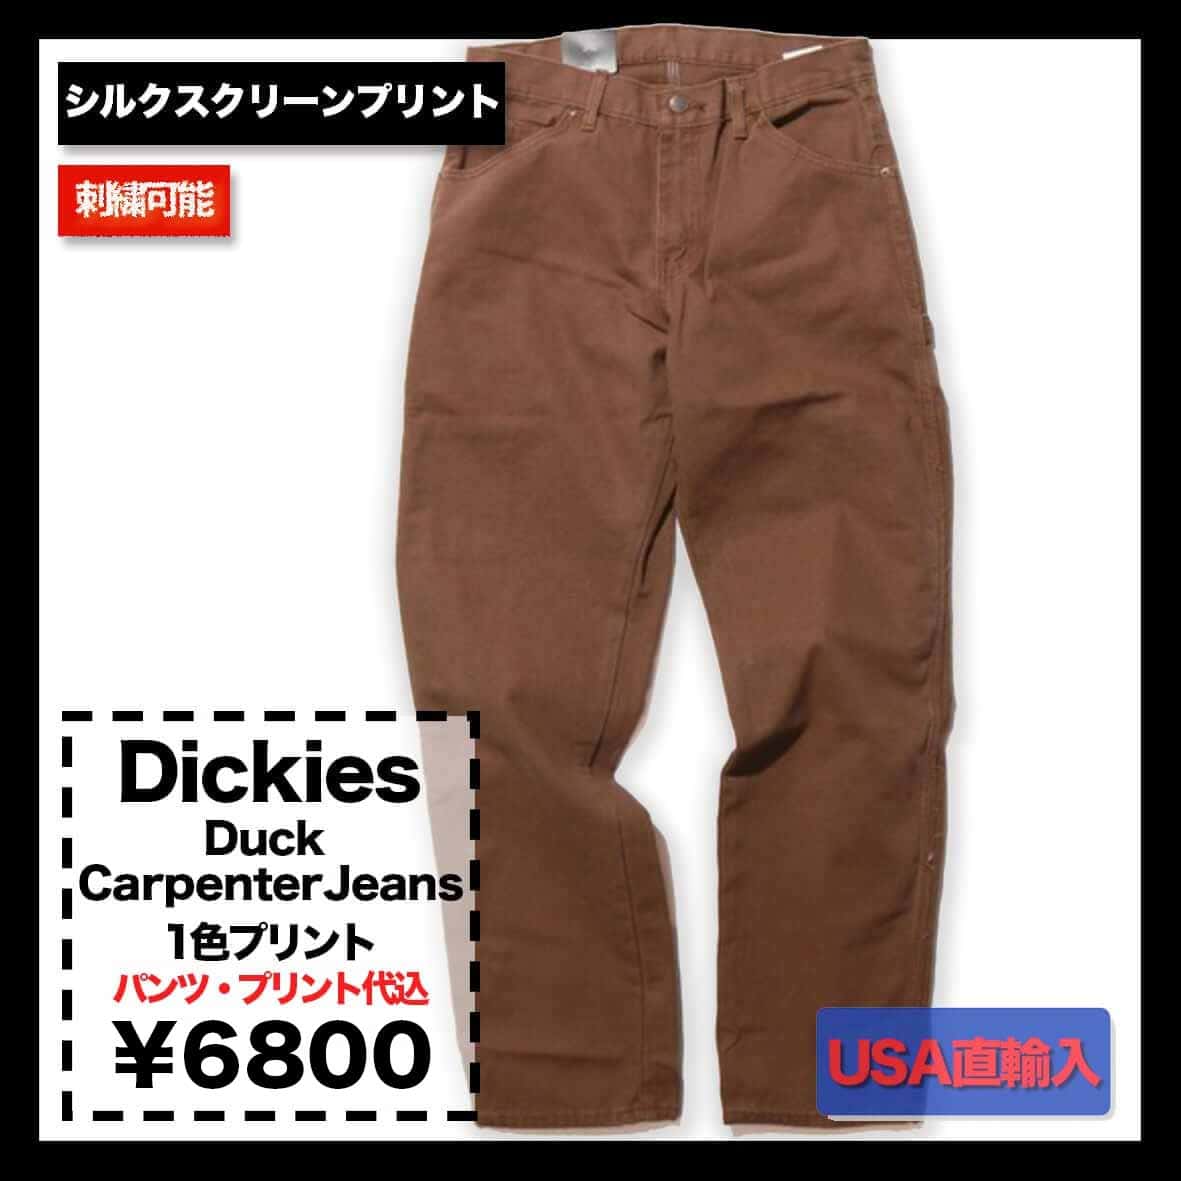 Dickies ディッキーズ 12.0 oz Duck Carpenter Jeans (品番1933US)